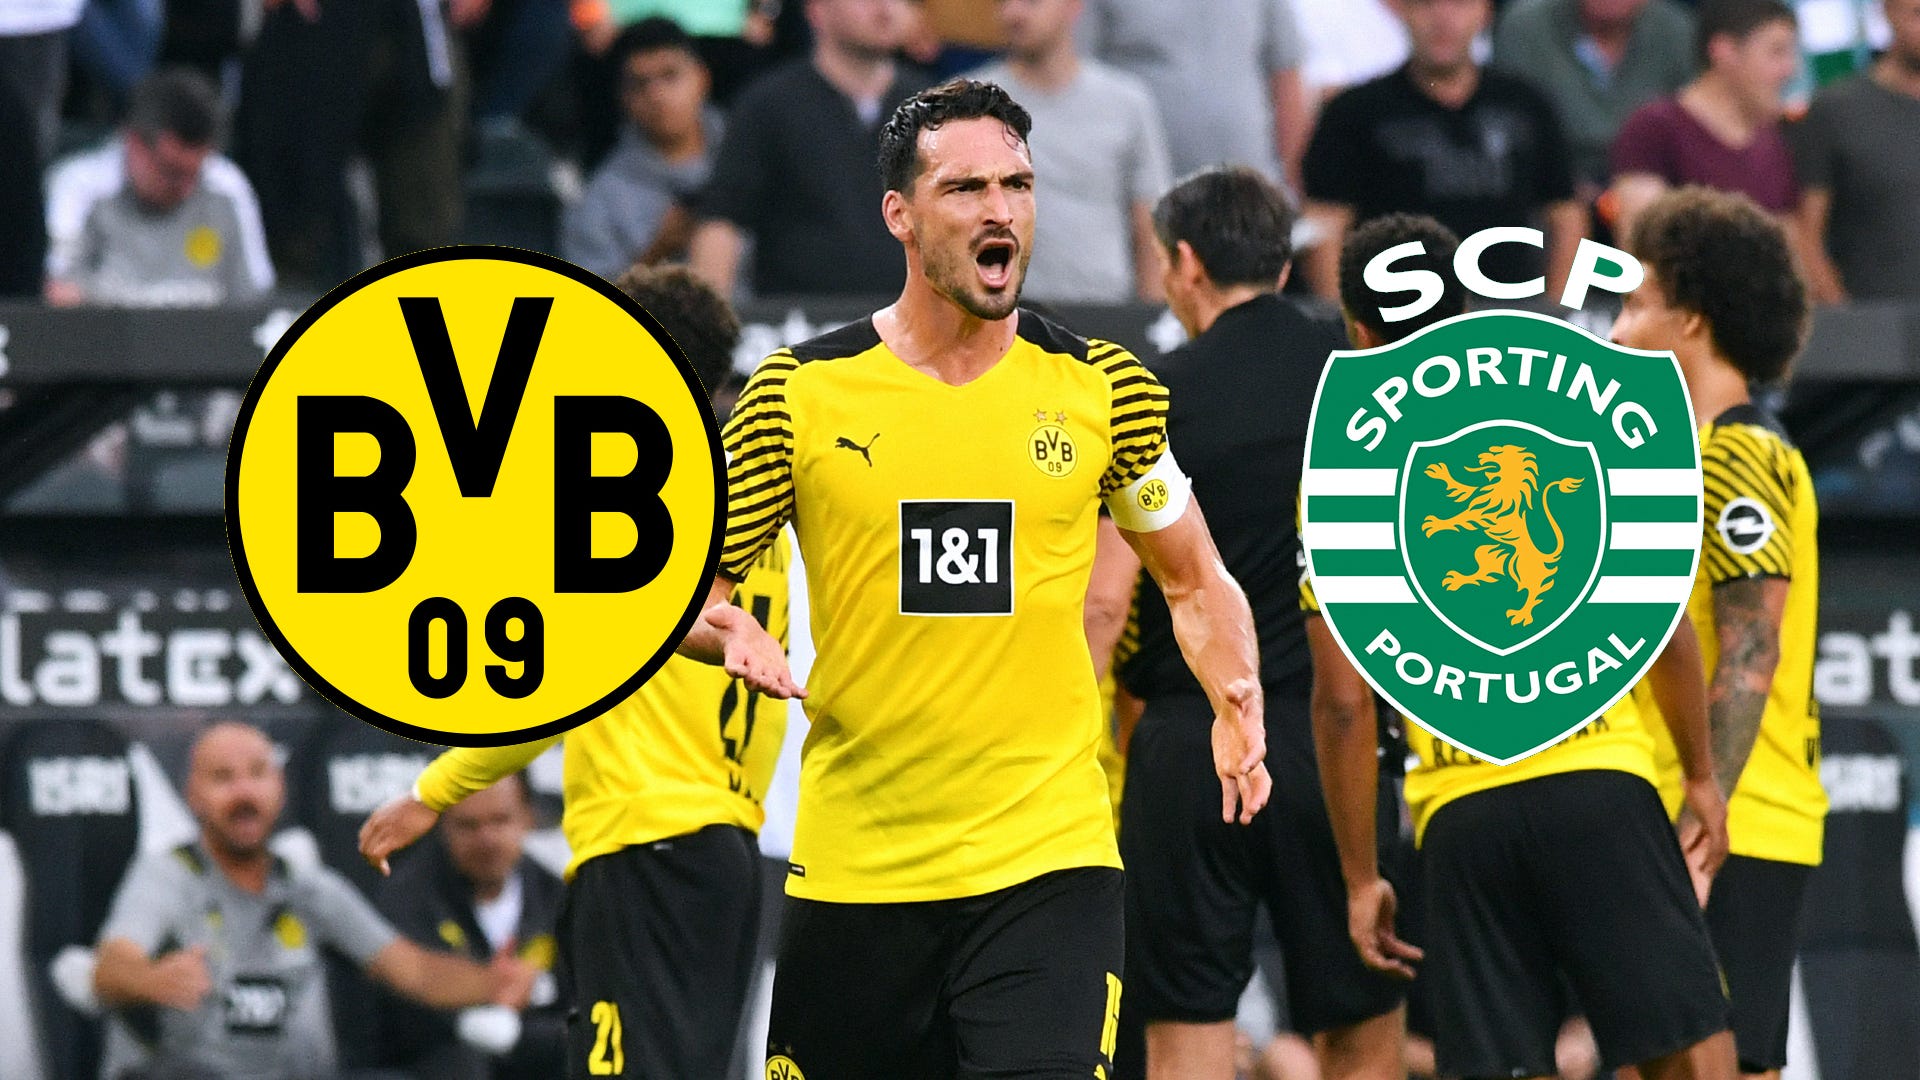 Fußball heute live im TV und LIVE-STREAM So wird BVB (Borussia Dortmund) vs